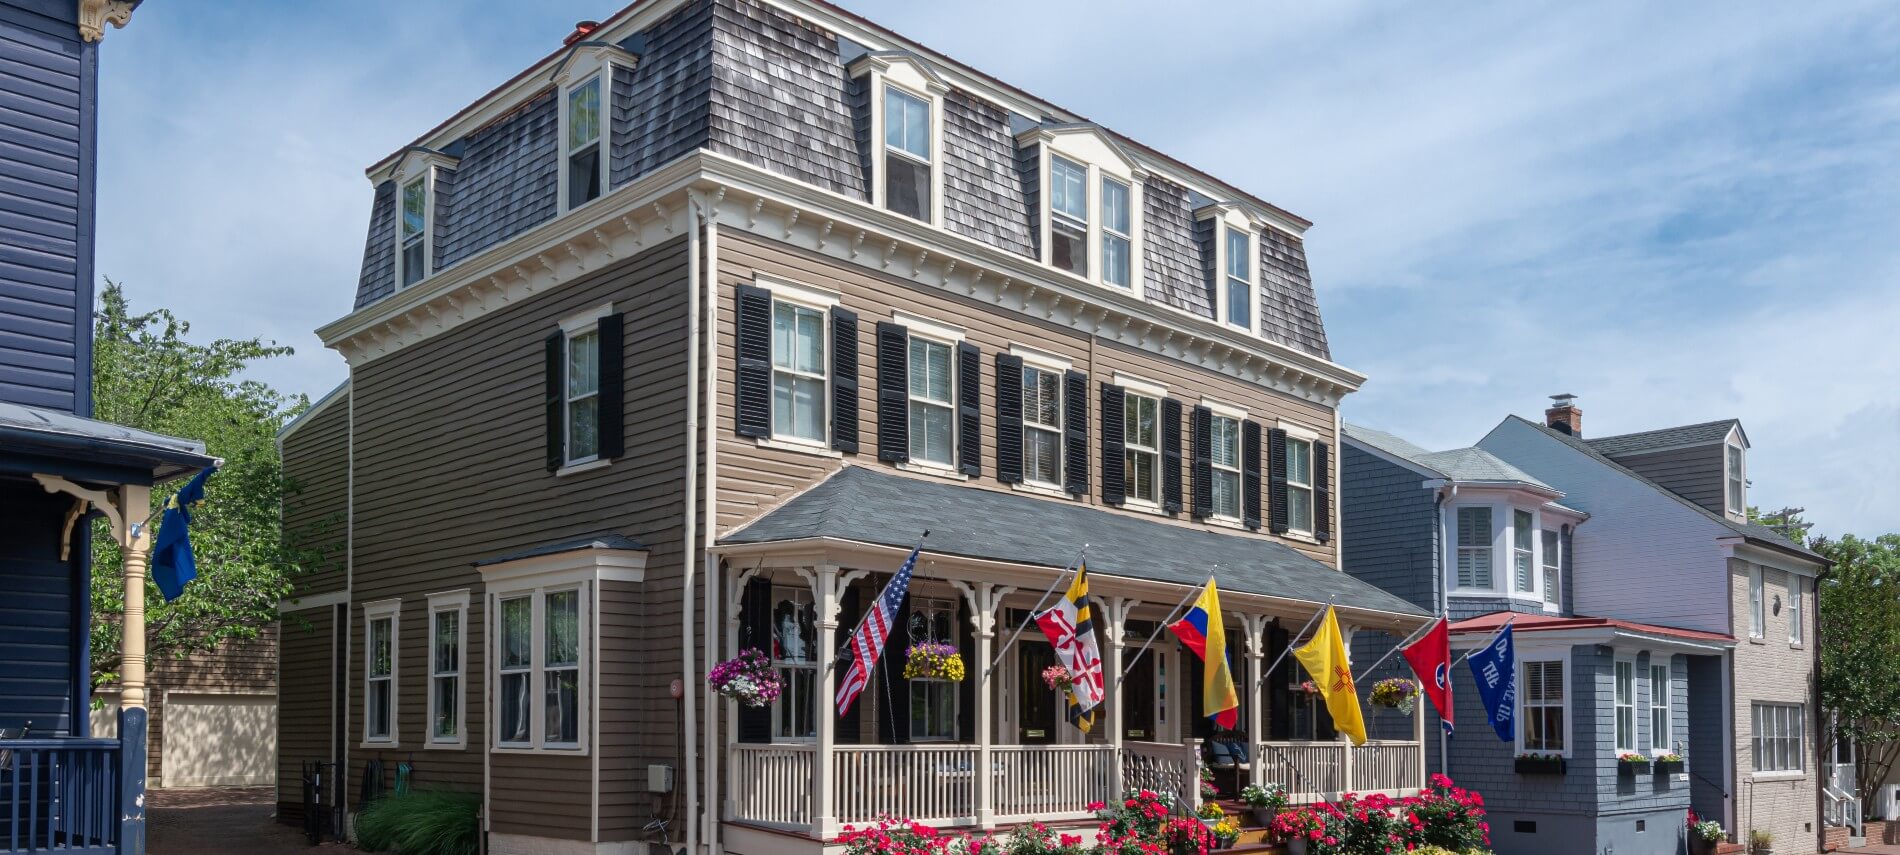 large house, porch, windows, flags